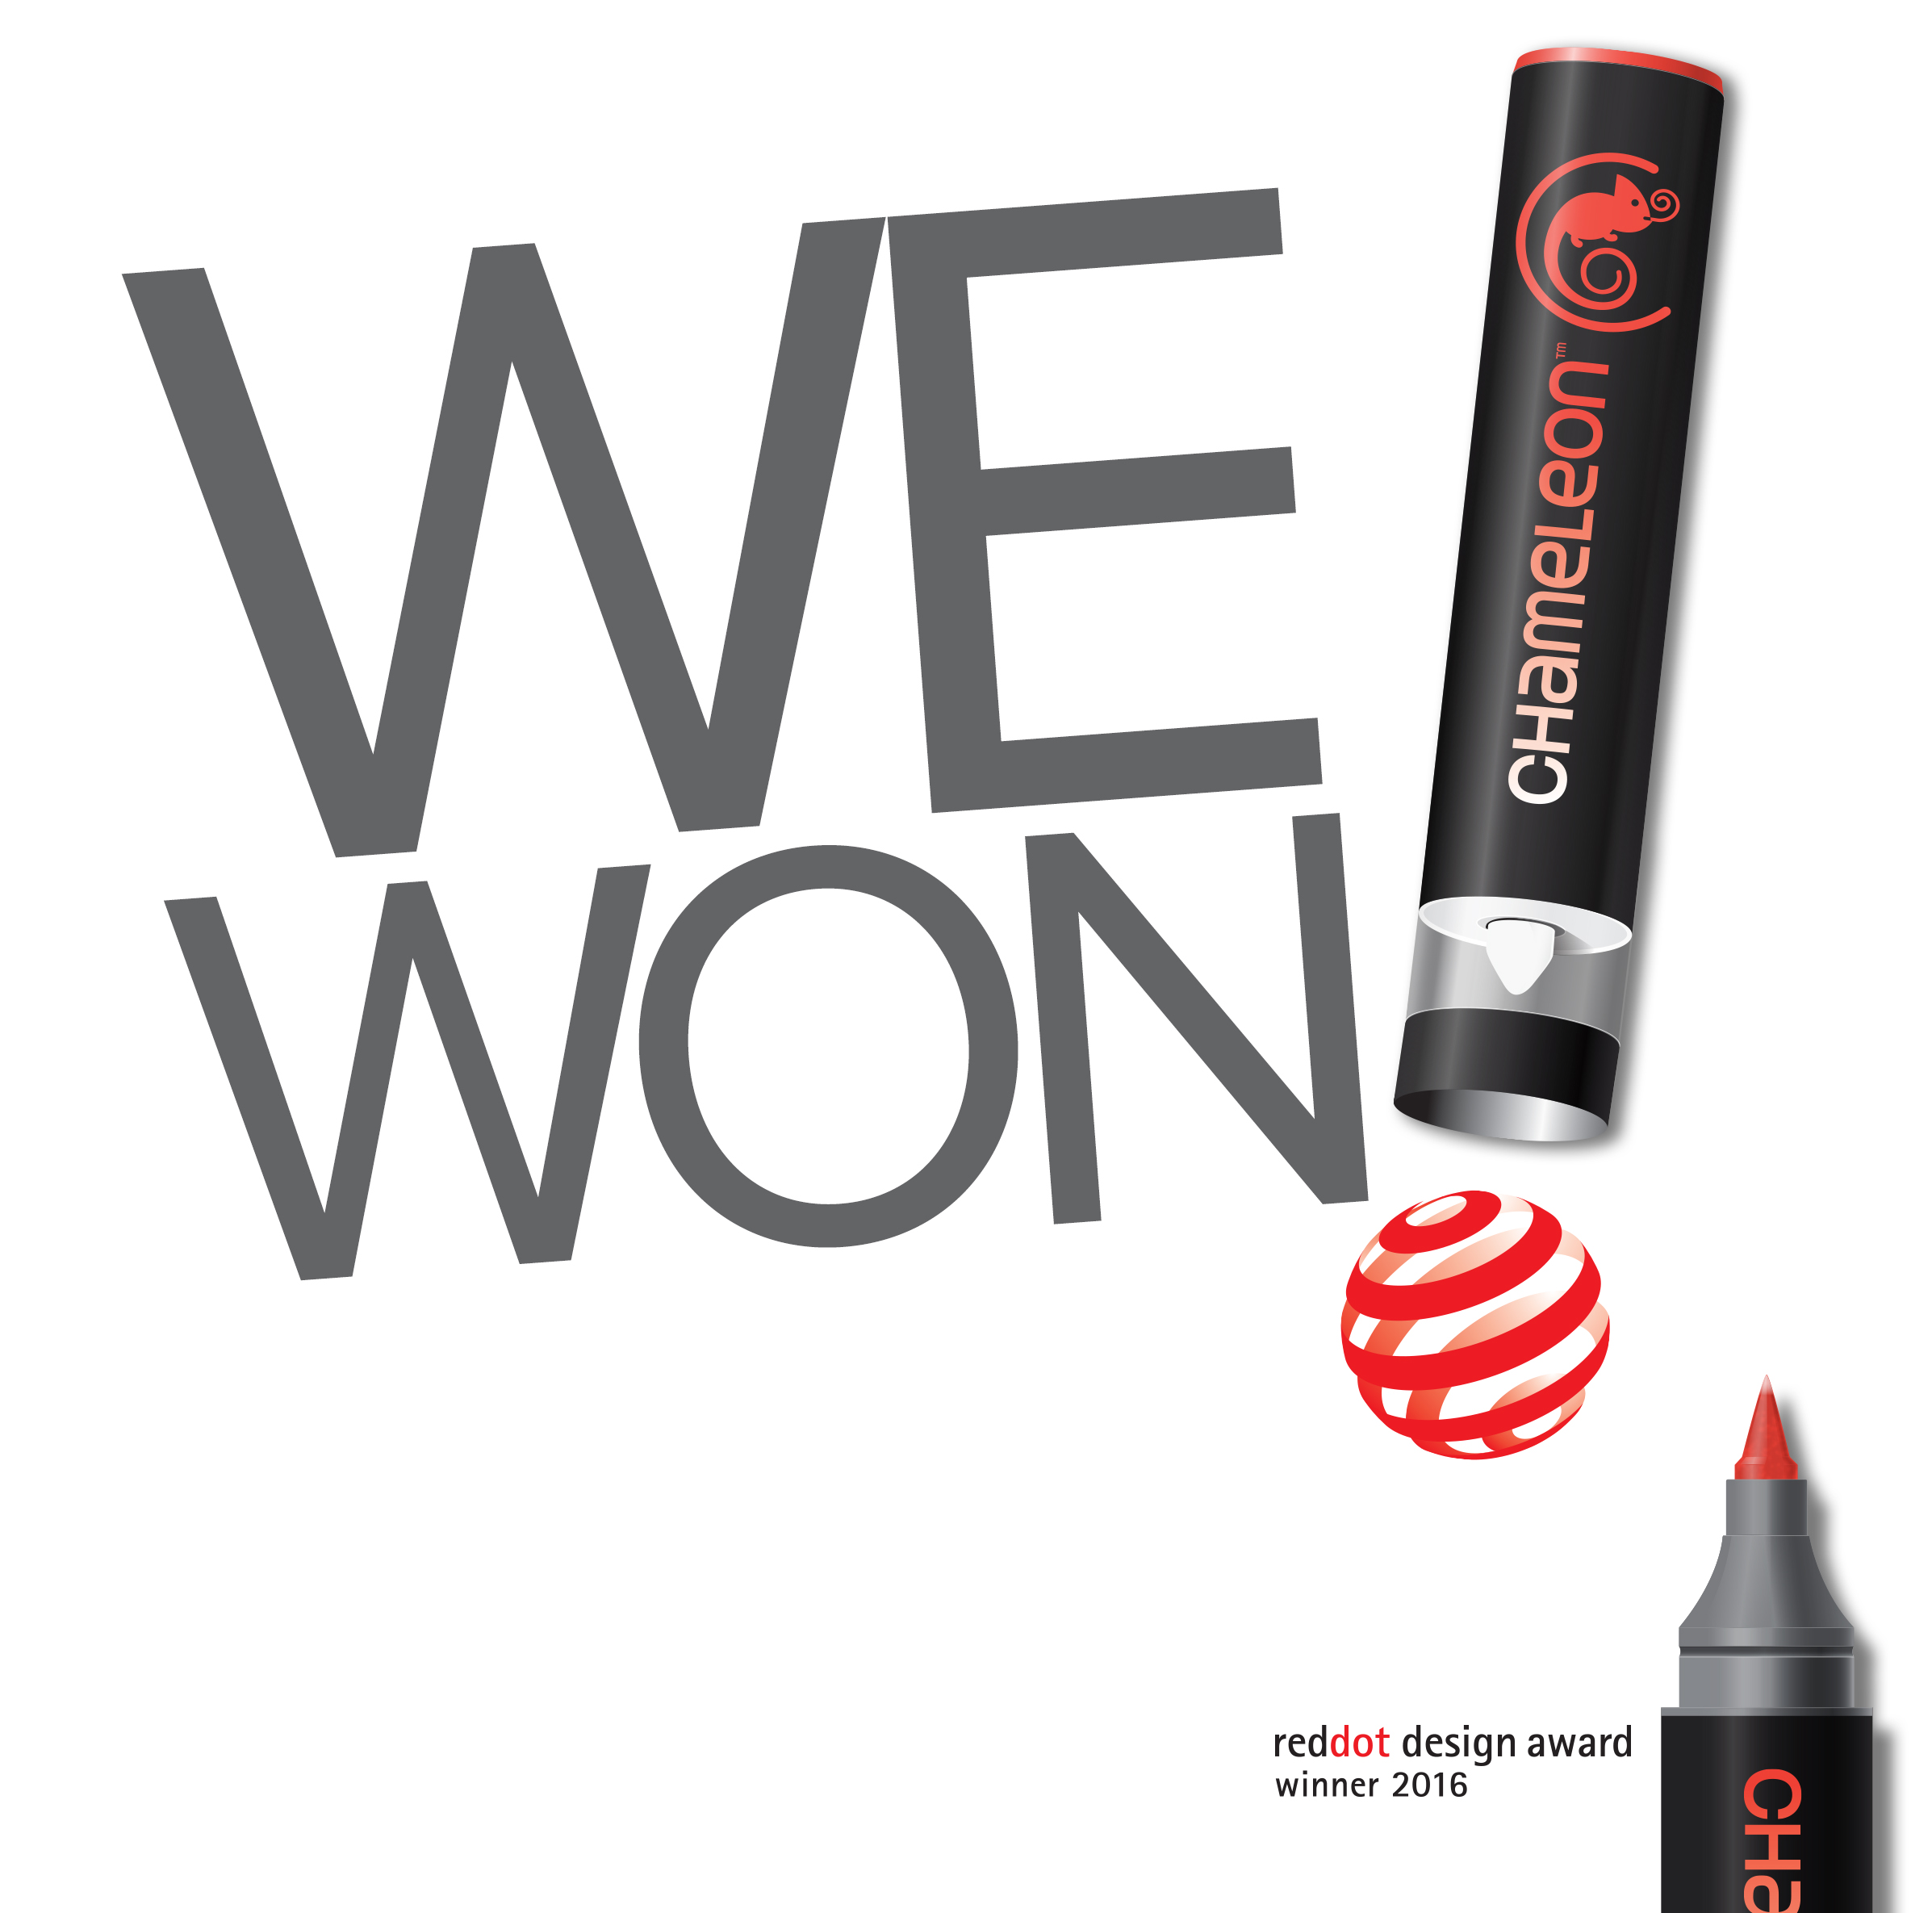 Chameleon Color Tones Pens Triumphs in Red Dot Award: Product